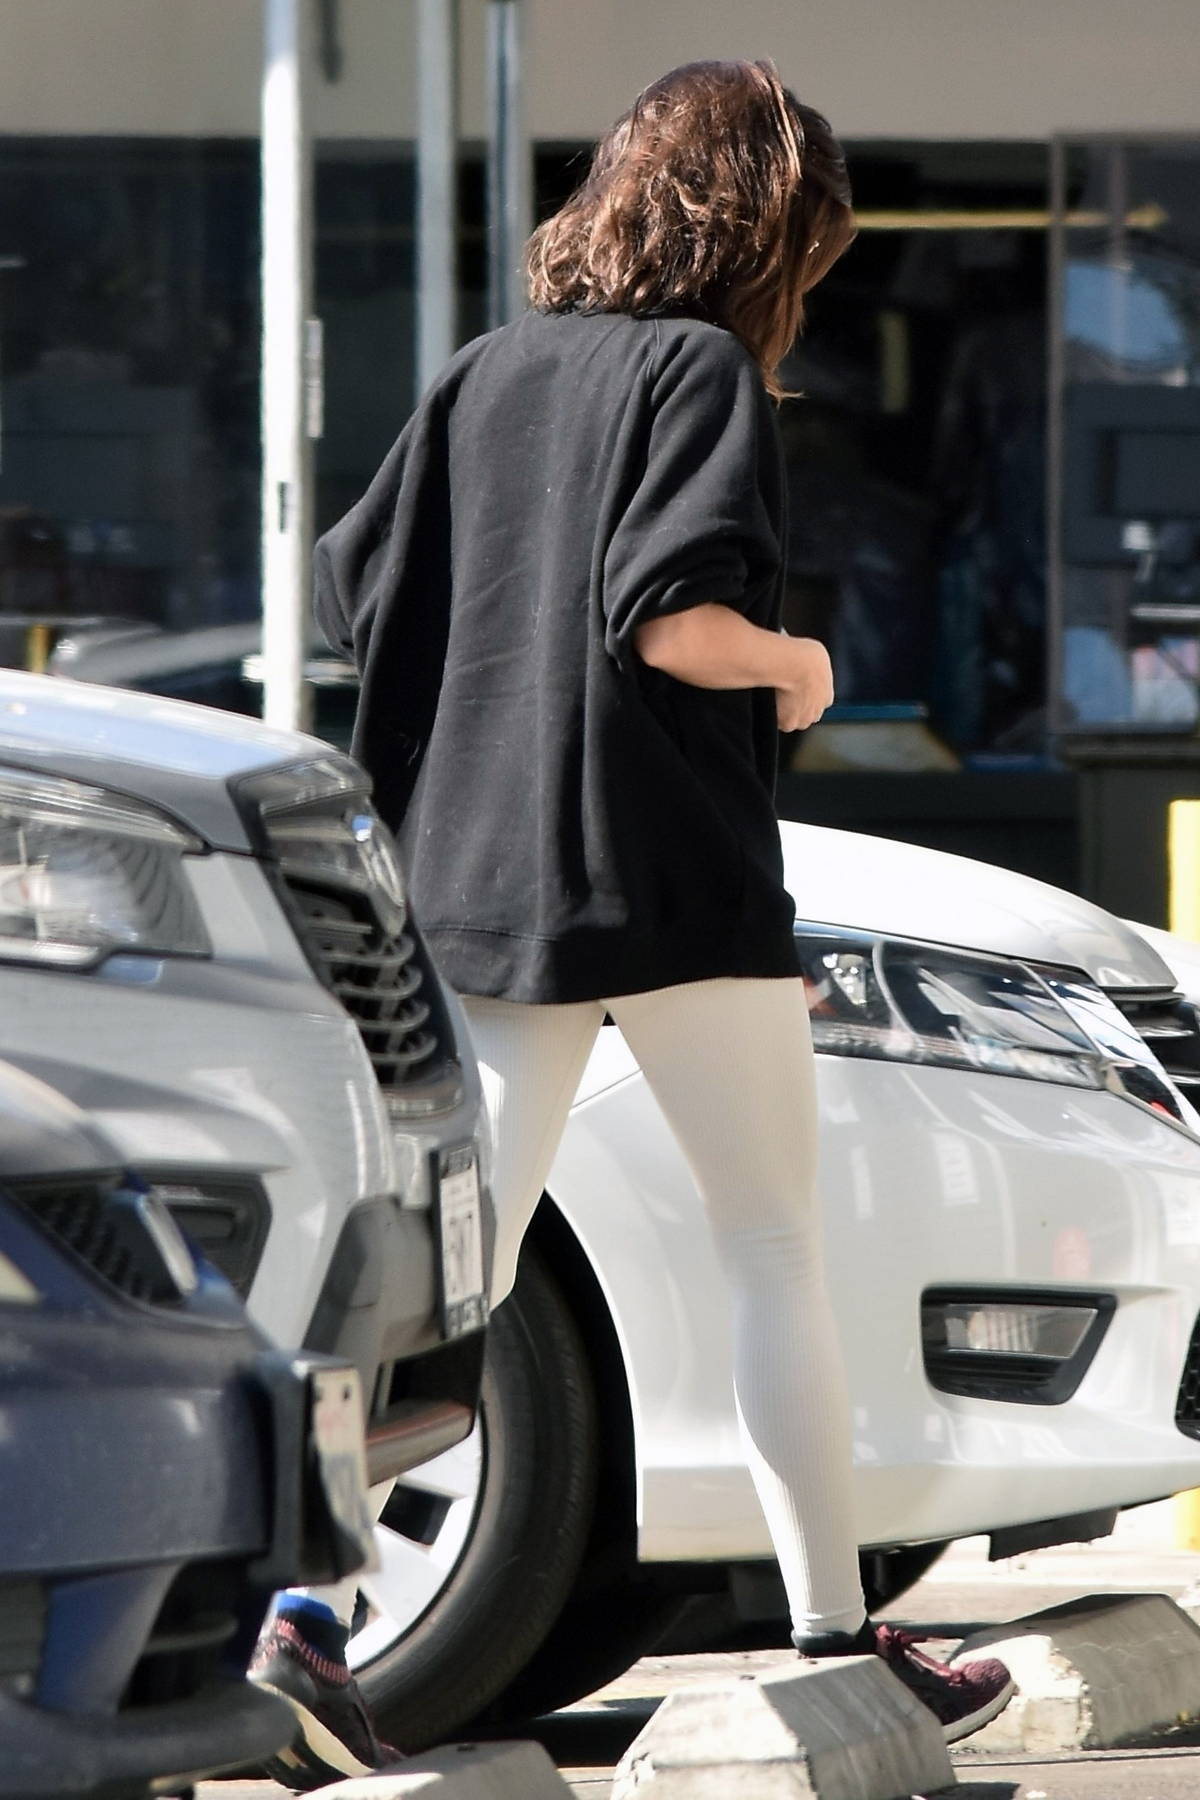 Aubrey Plaza wears a black sweatshirt and white leggings while she